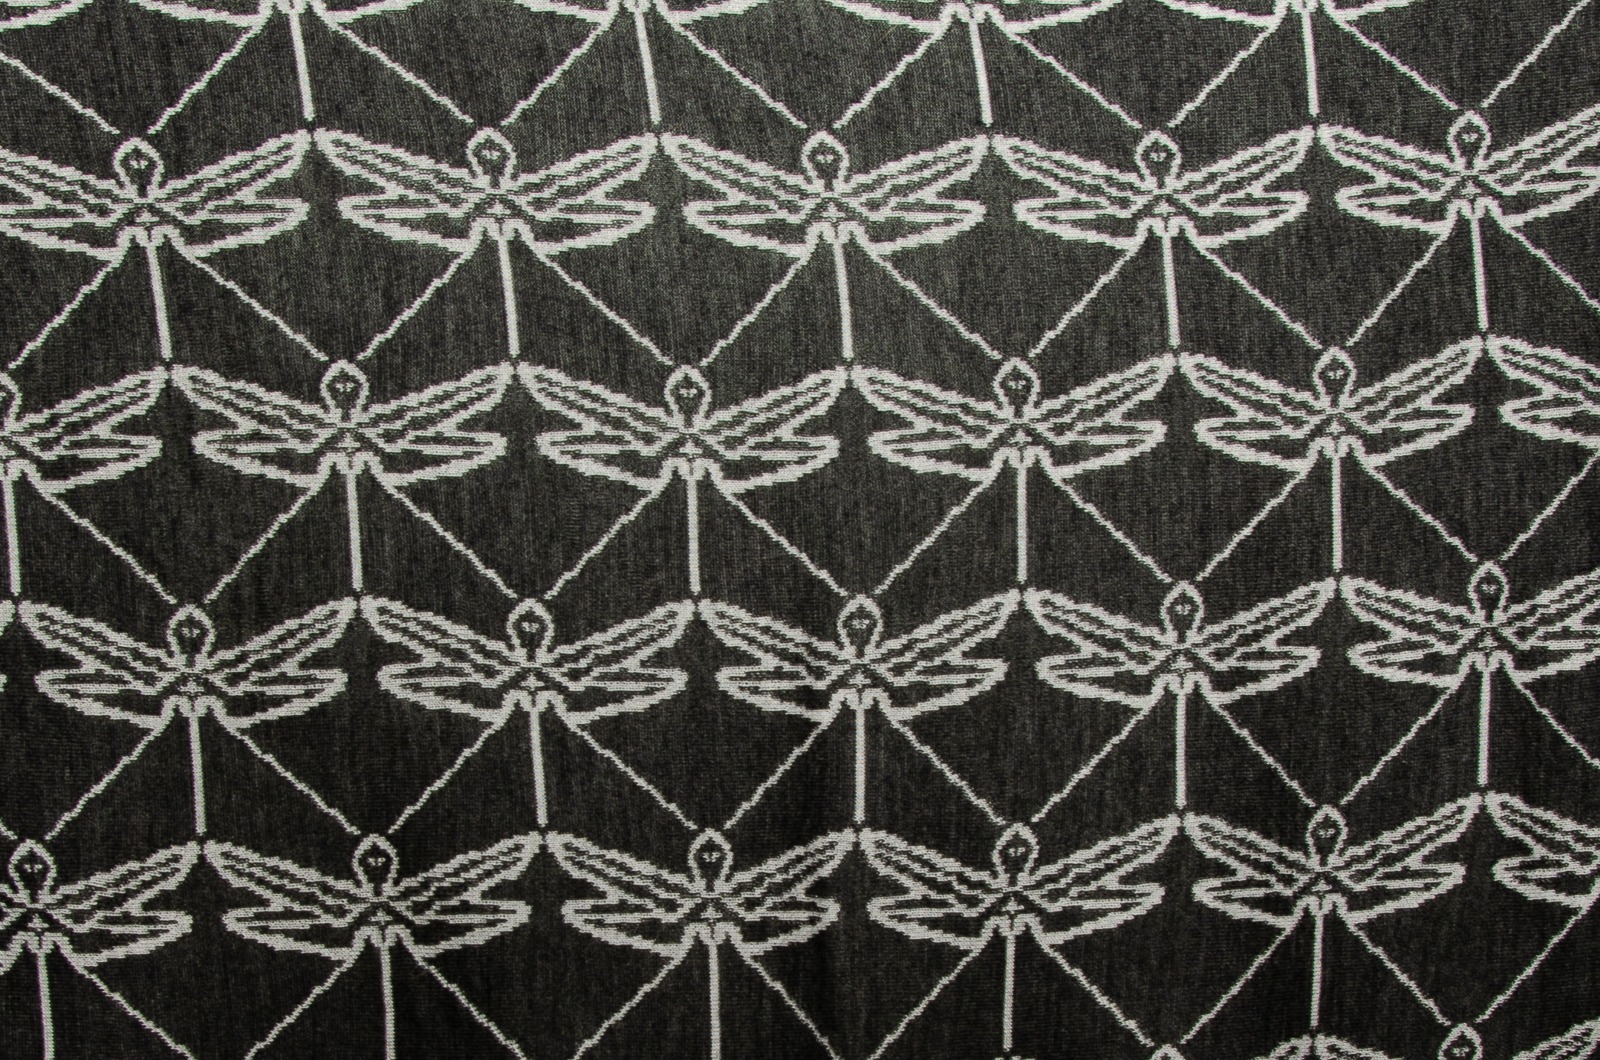 Stole, triangular shawl in light gray and dark gray 3